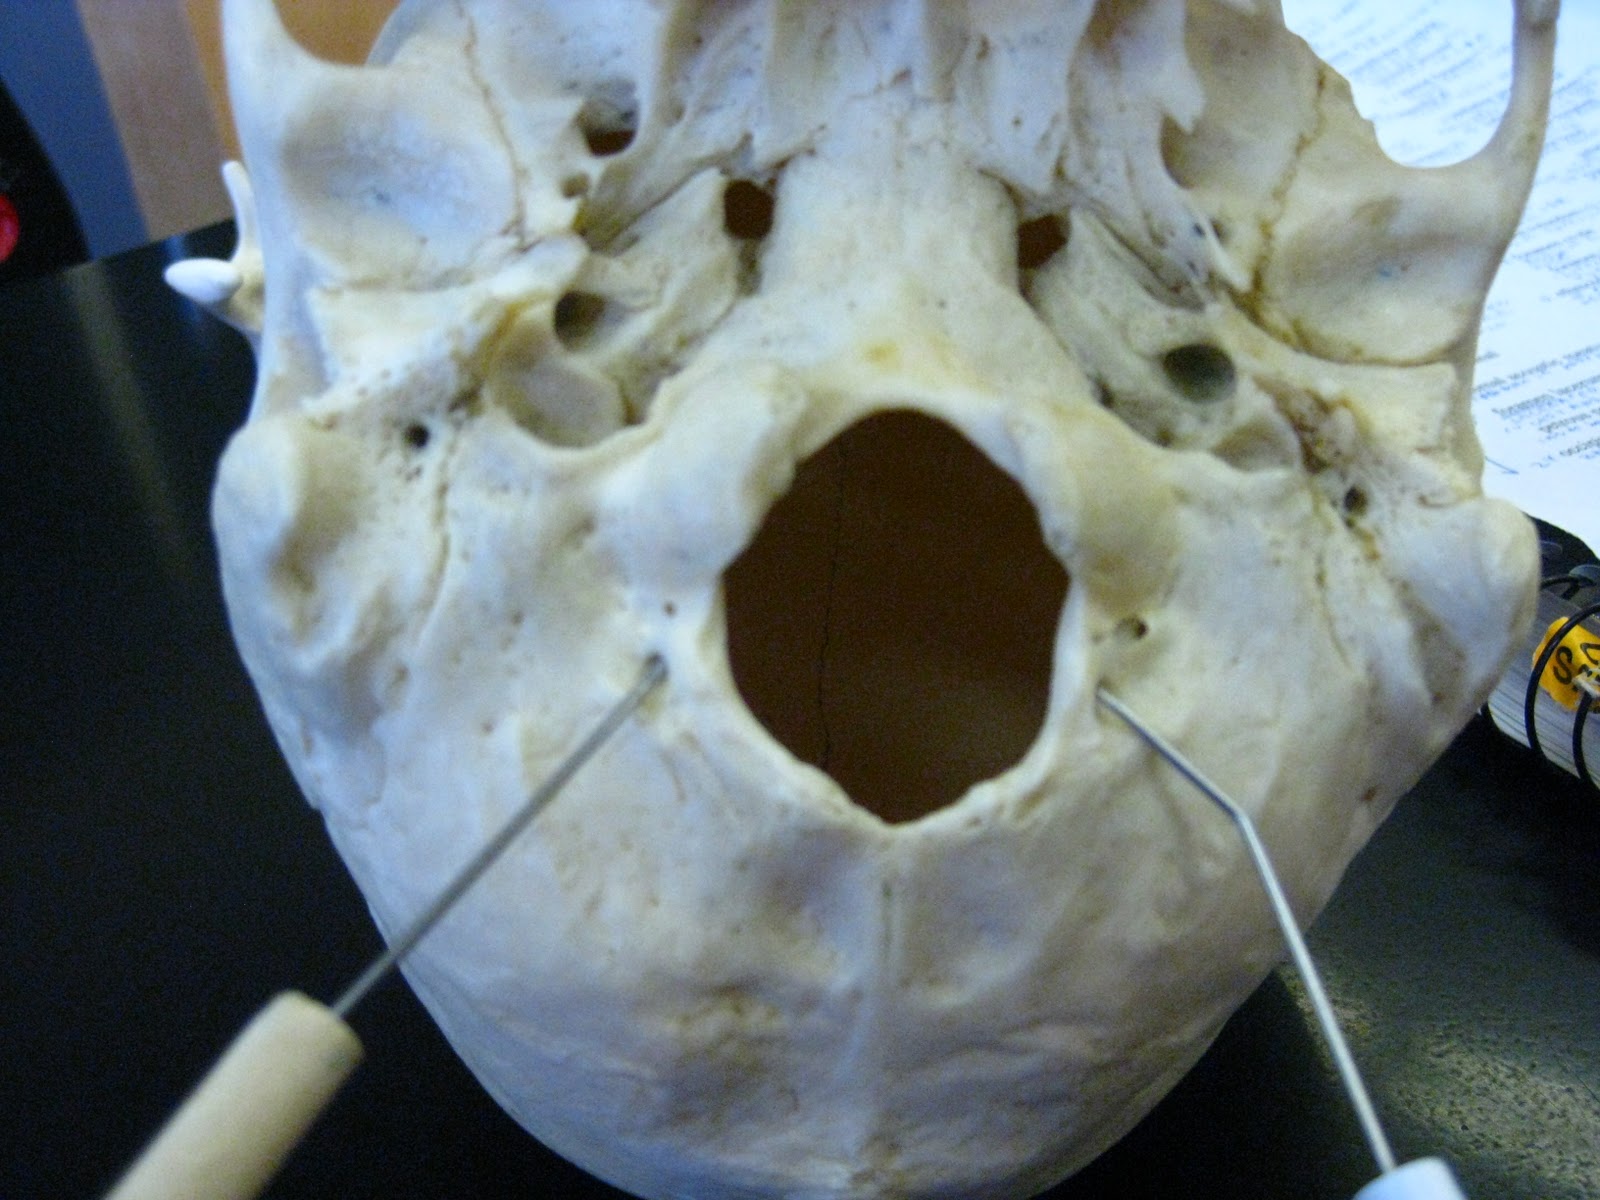 Boned: Human Skull - condyloid canal (of occipital bone)